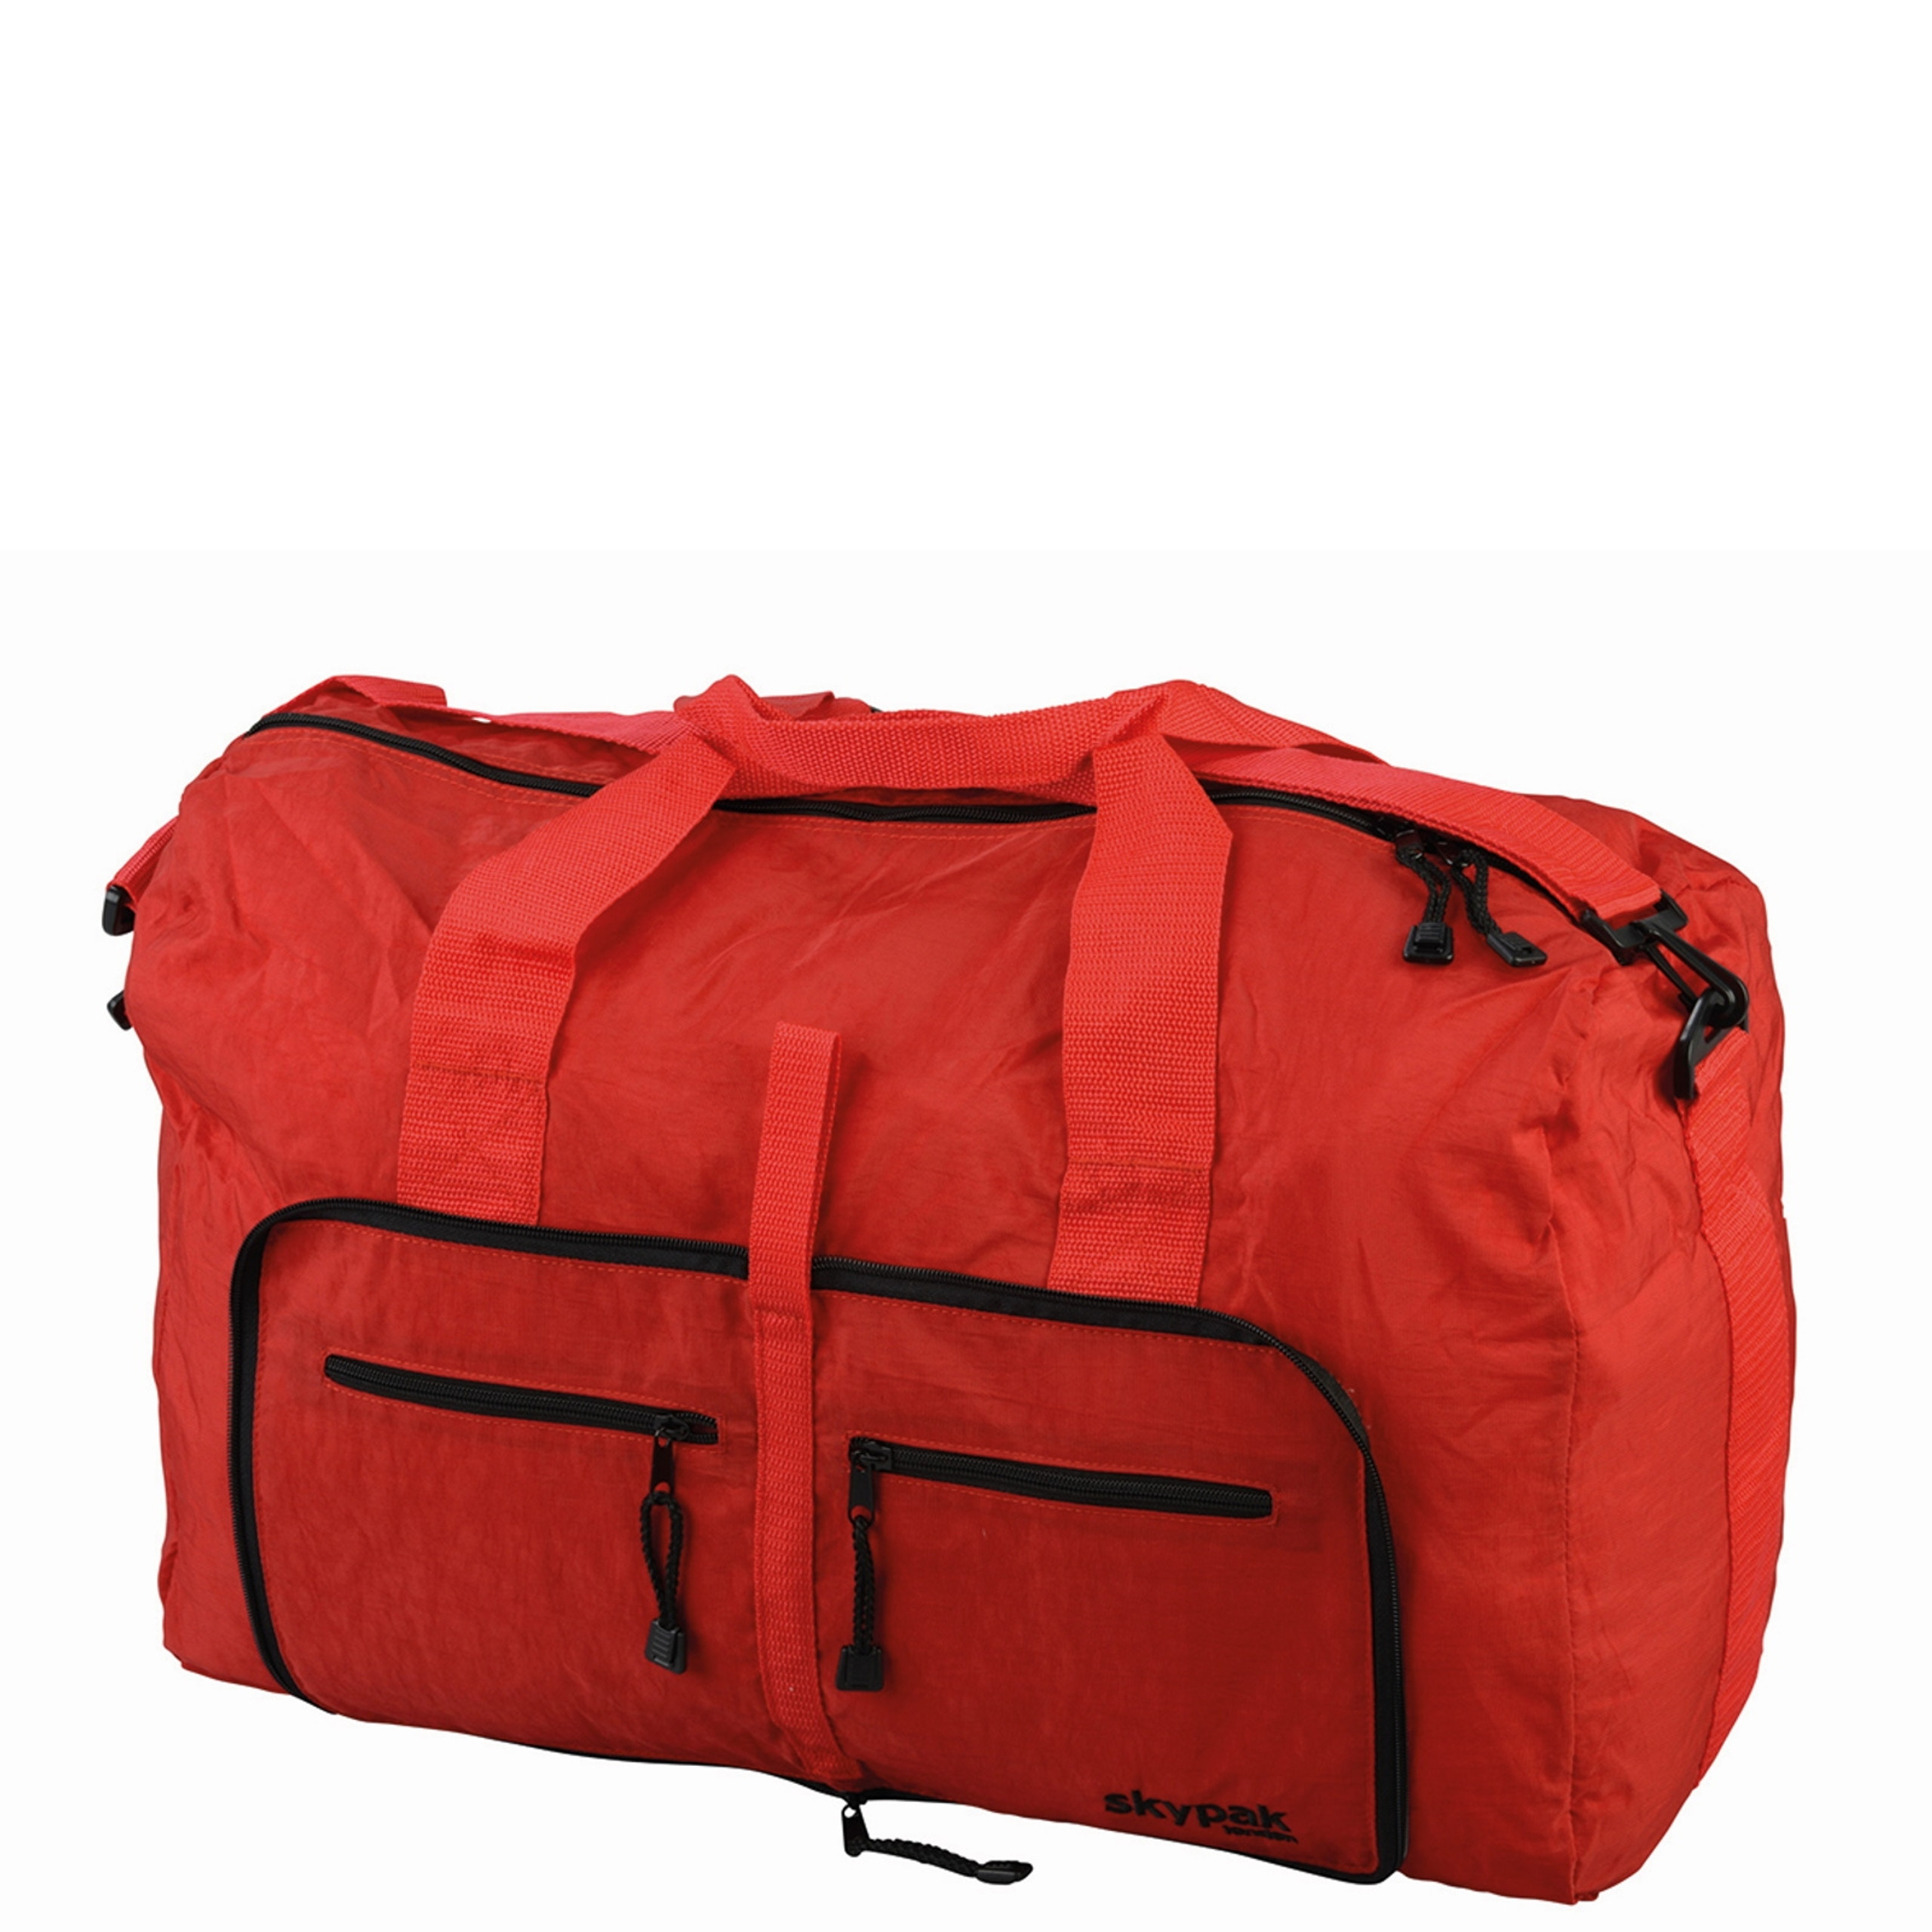 Skypak 53cm Onboard Folding Travel Bag at Luggage Superstore